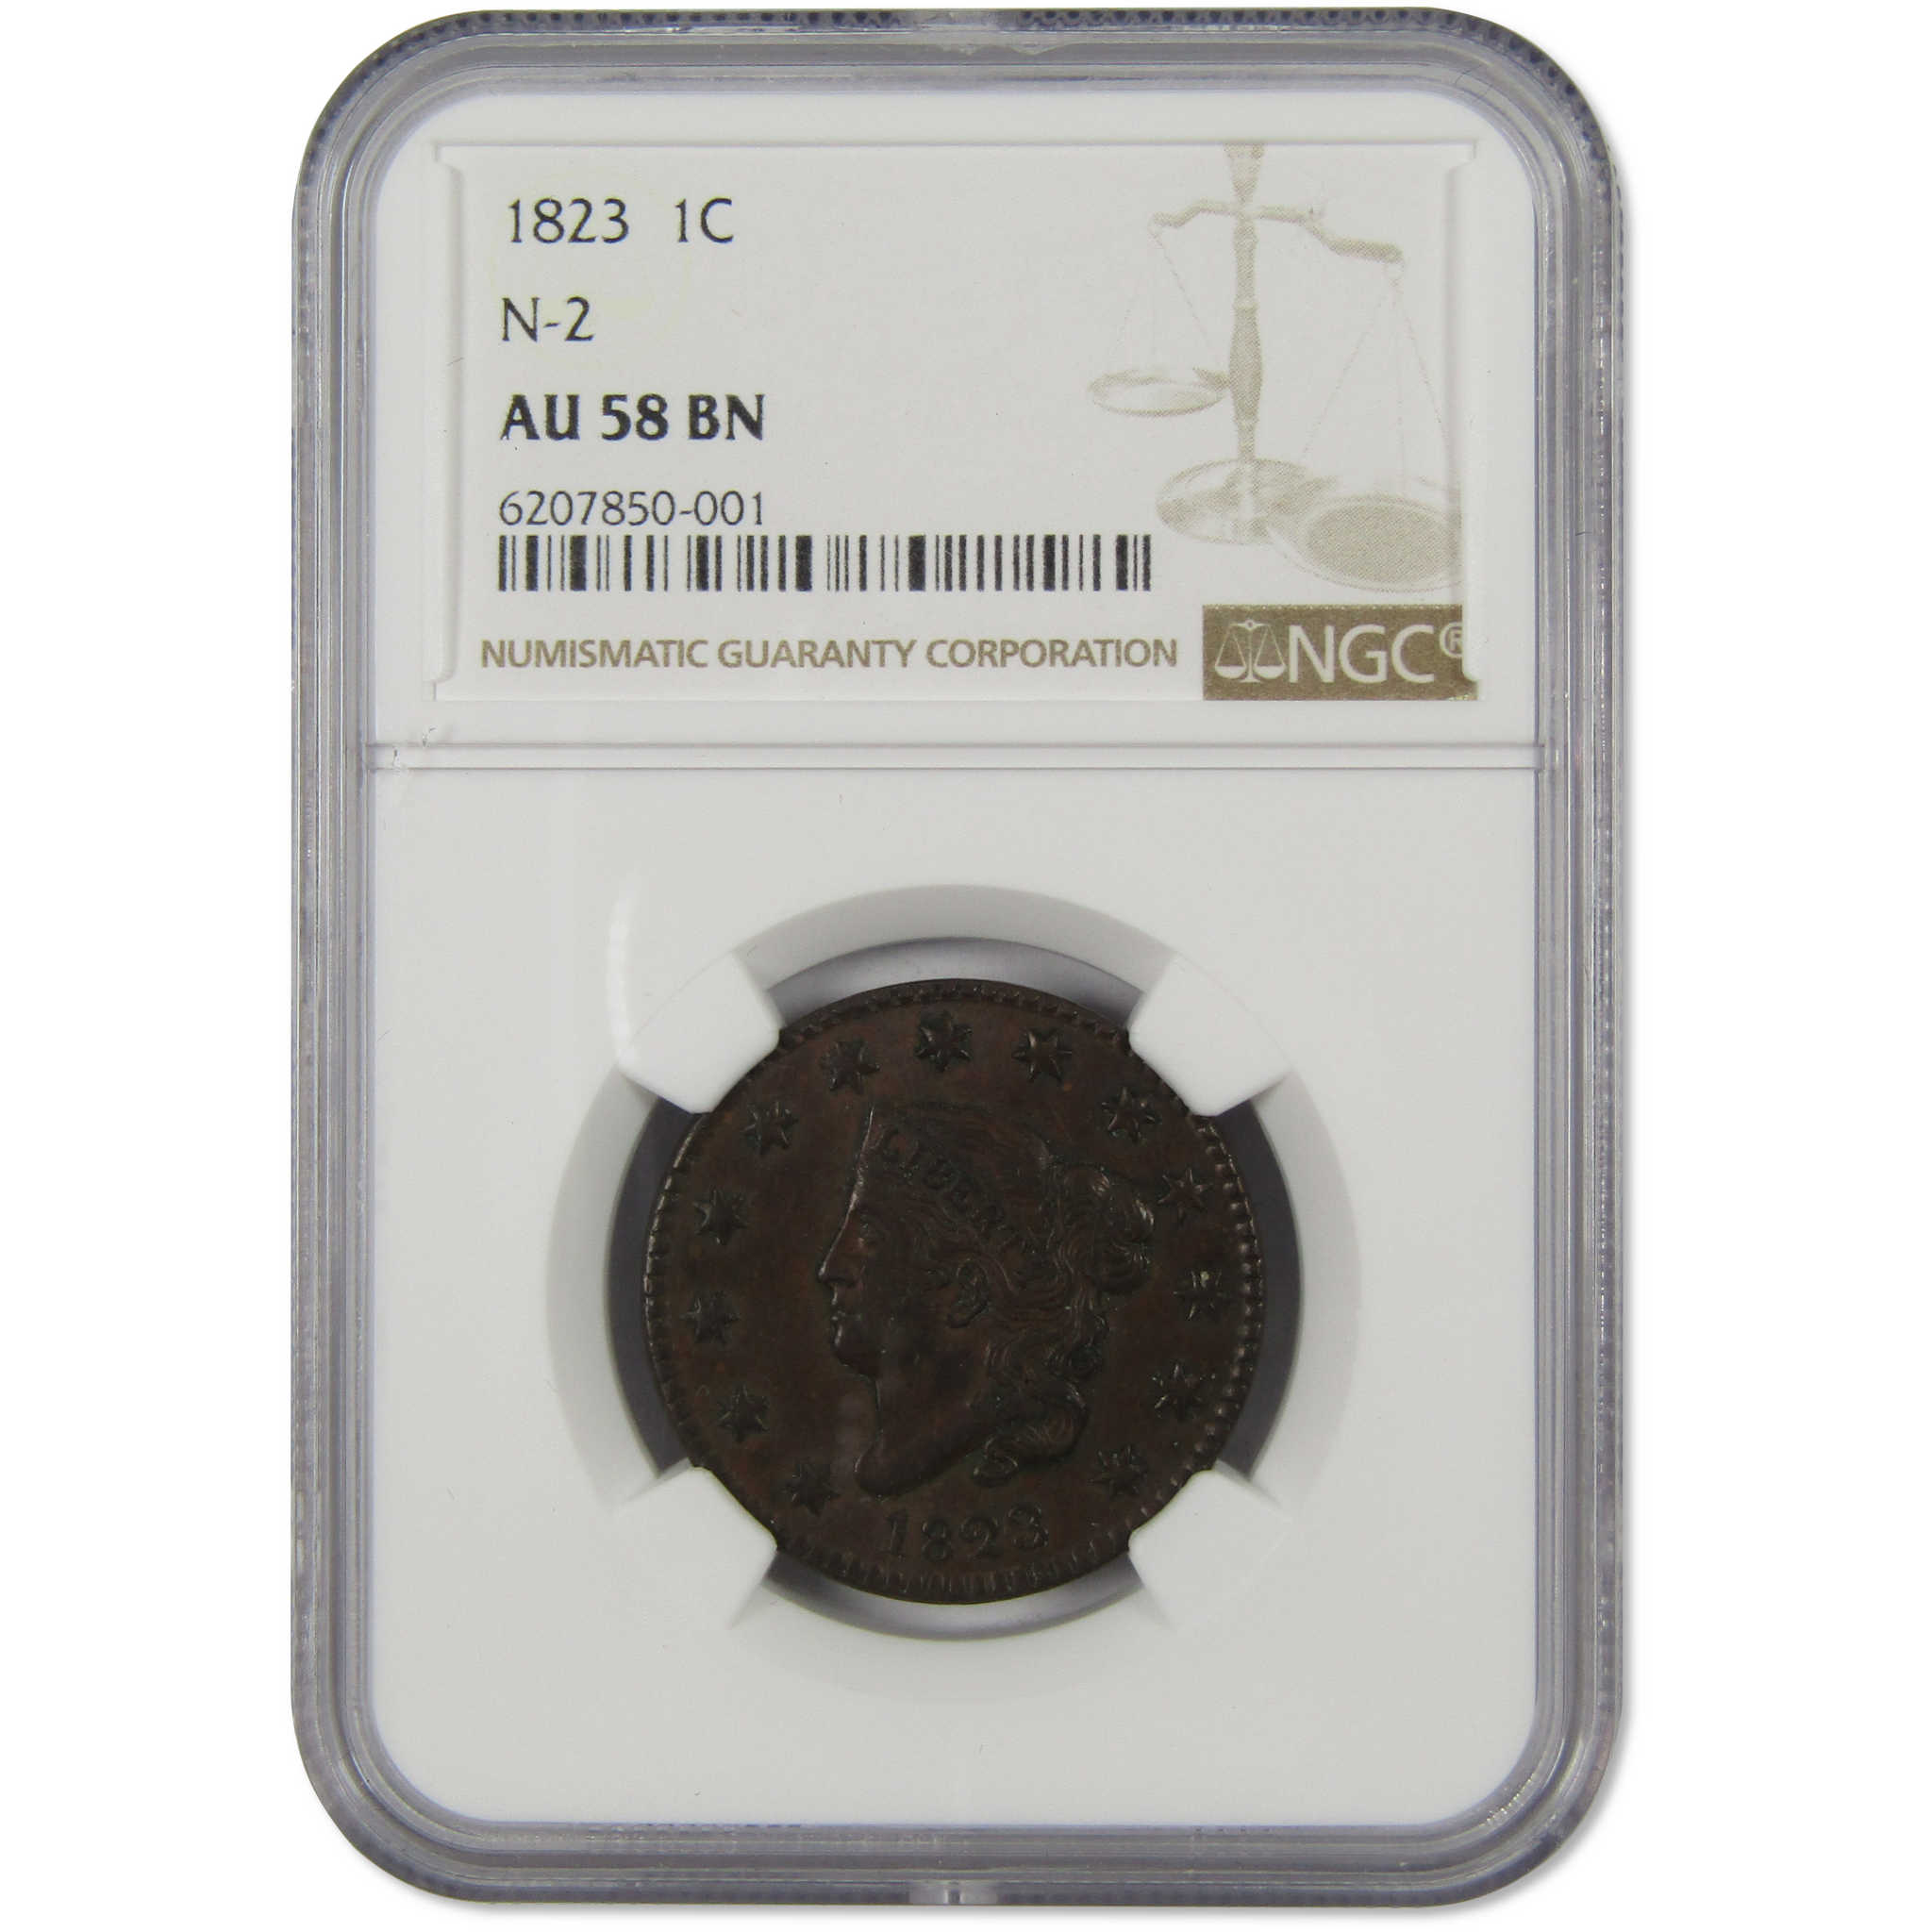 U.S. Large Cent (Coronet or Braided Type) - 1816 to 1857 - United